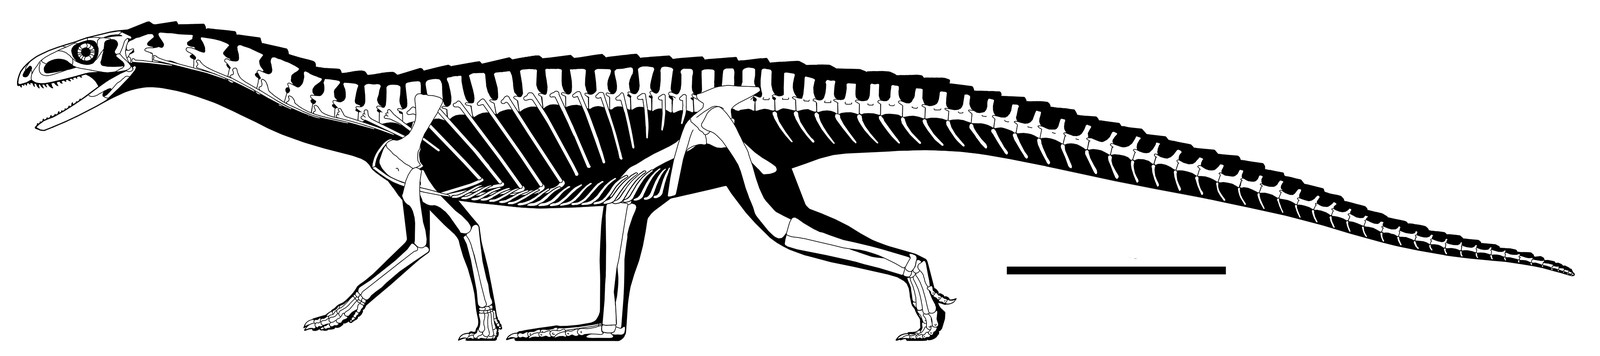 Desenho de como é a estrutura óssea do Teleocrater rhadinus  (Foto: Natural History Museum, London, artwork by Mark Witton)